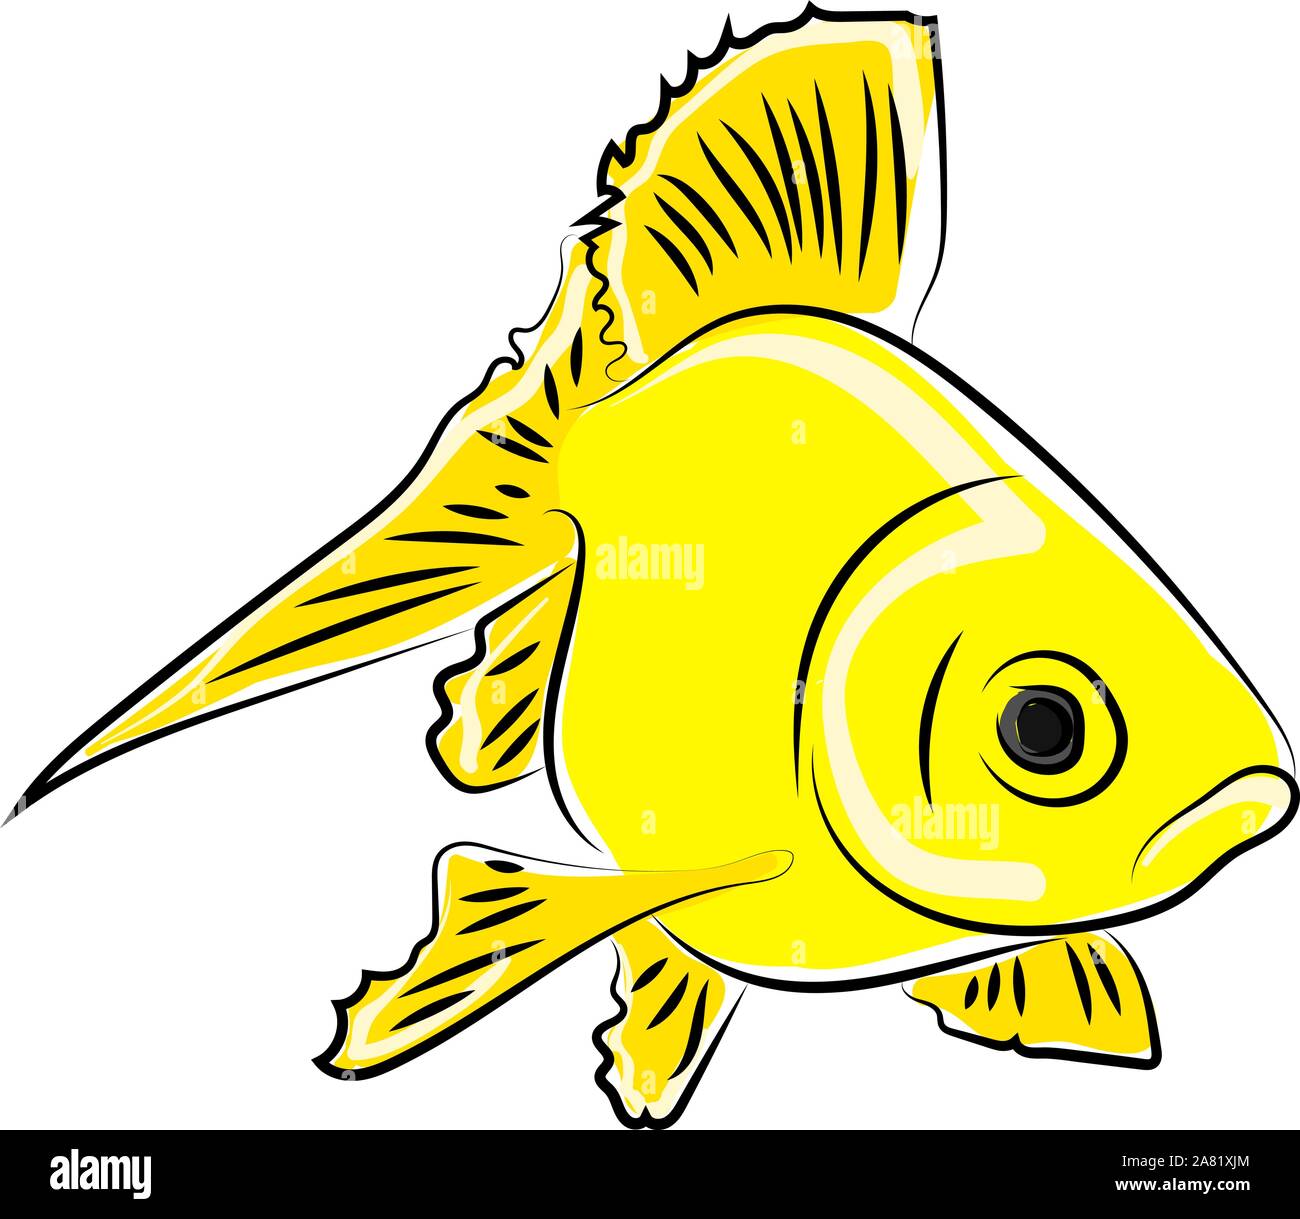 Golden fish aquarium Stock Vector Images - Page 3 - Alamy